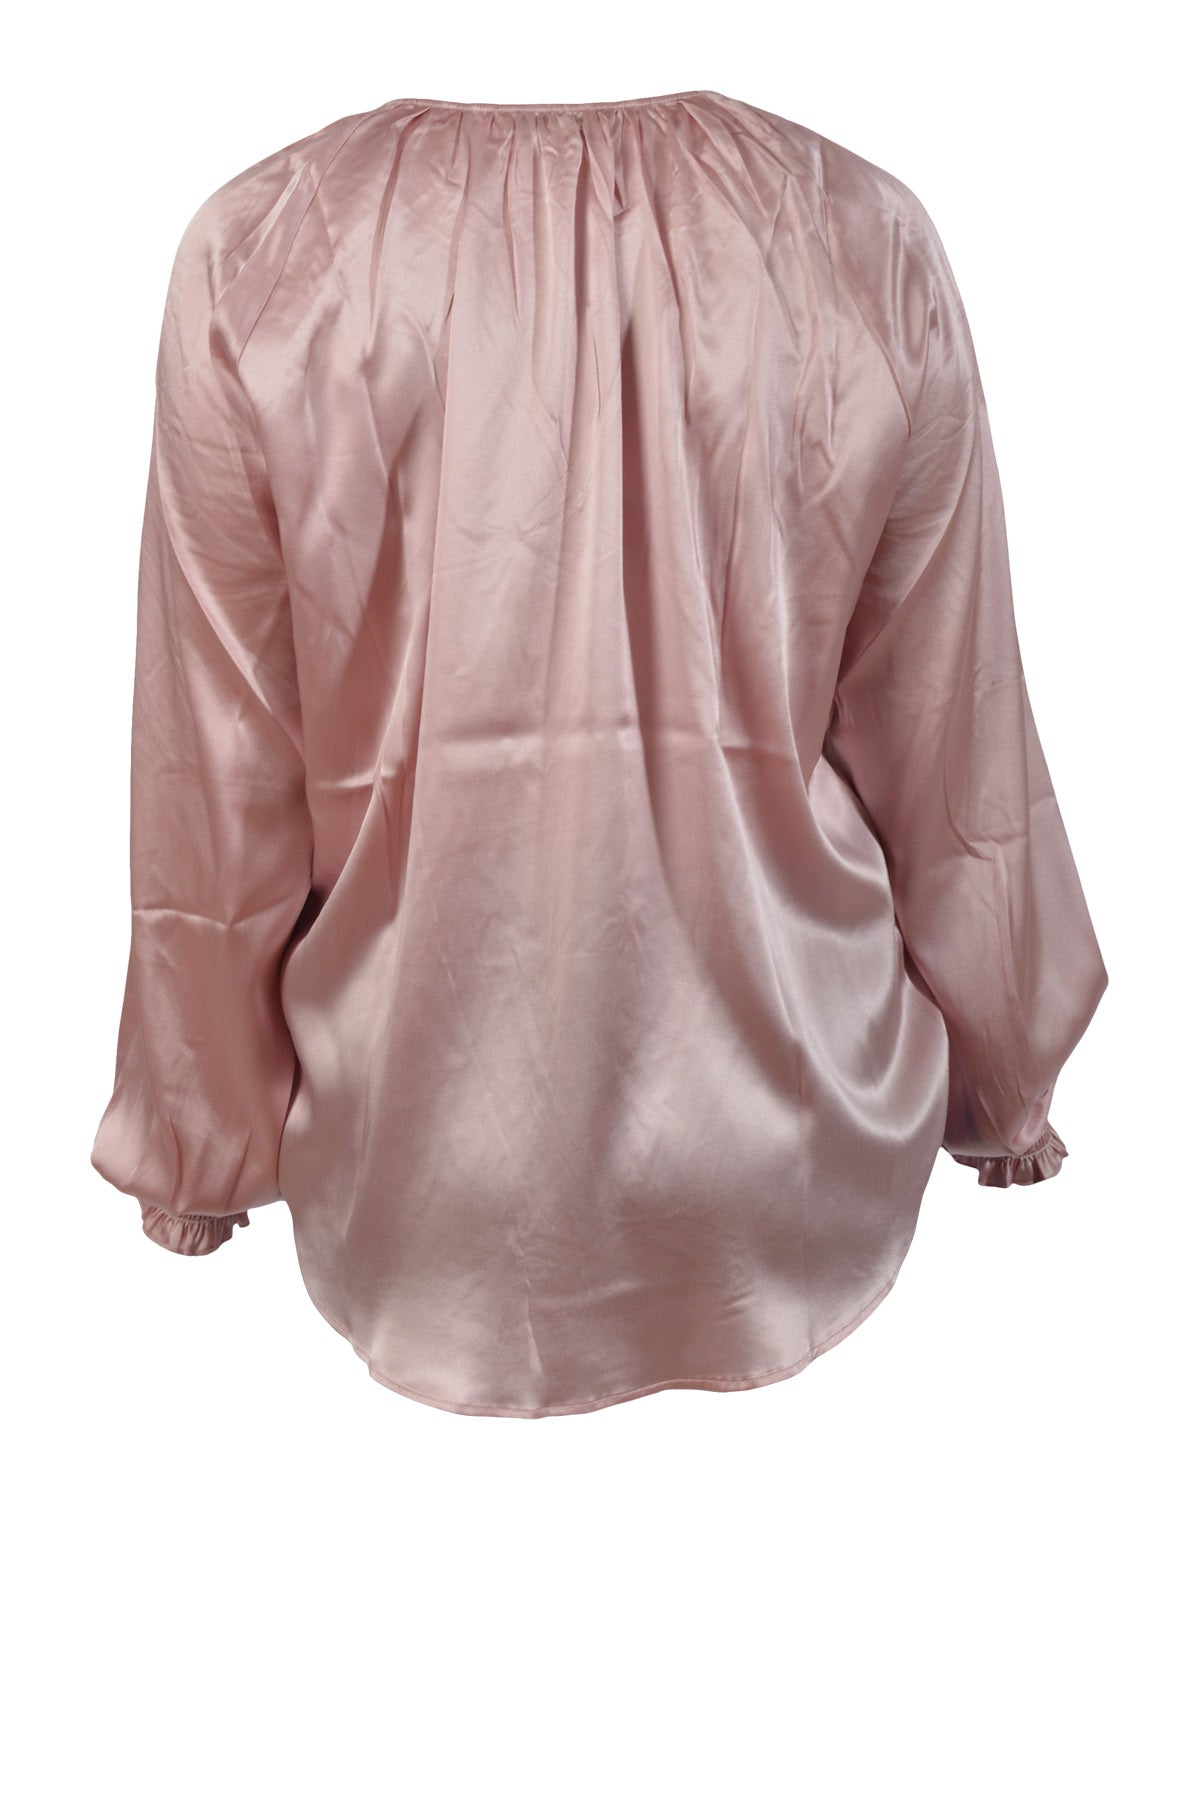 Charlotte Sparre Want med blouse 2801, Solid Rose